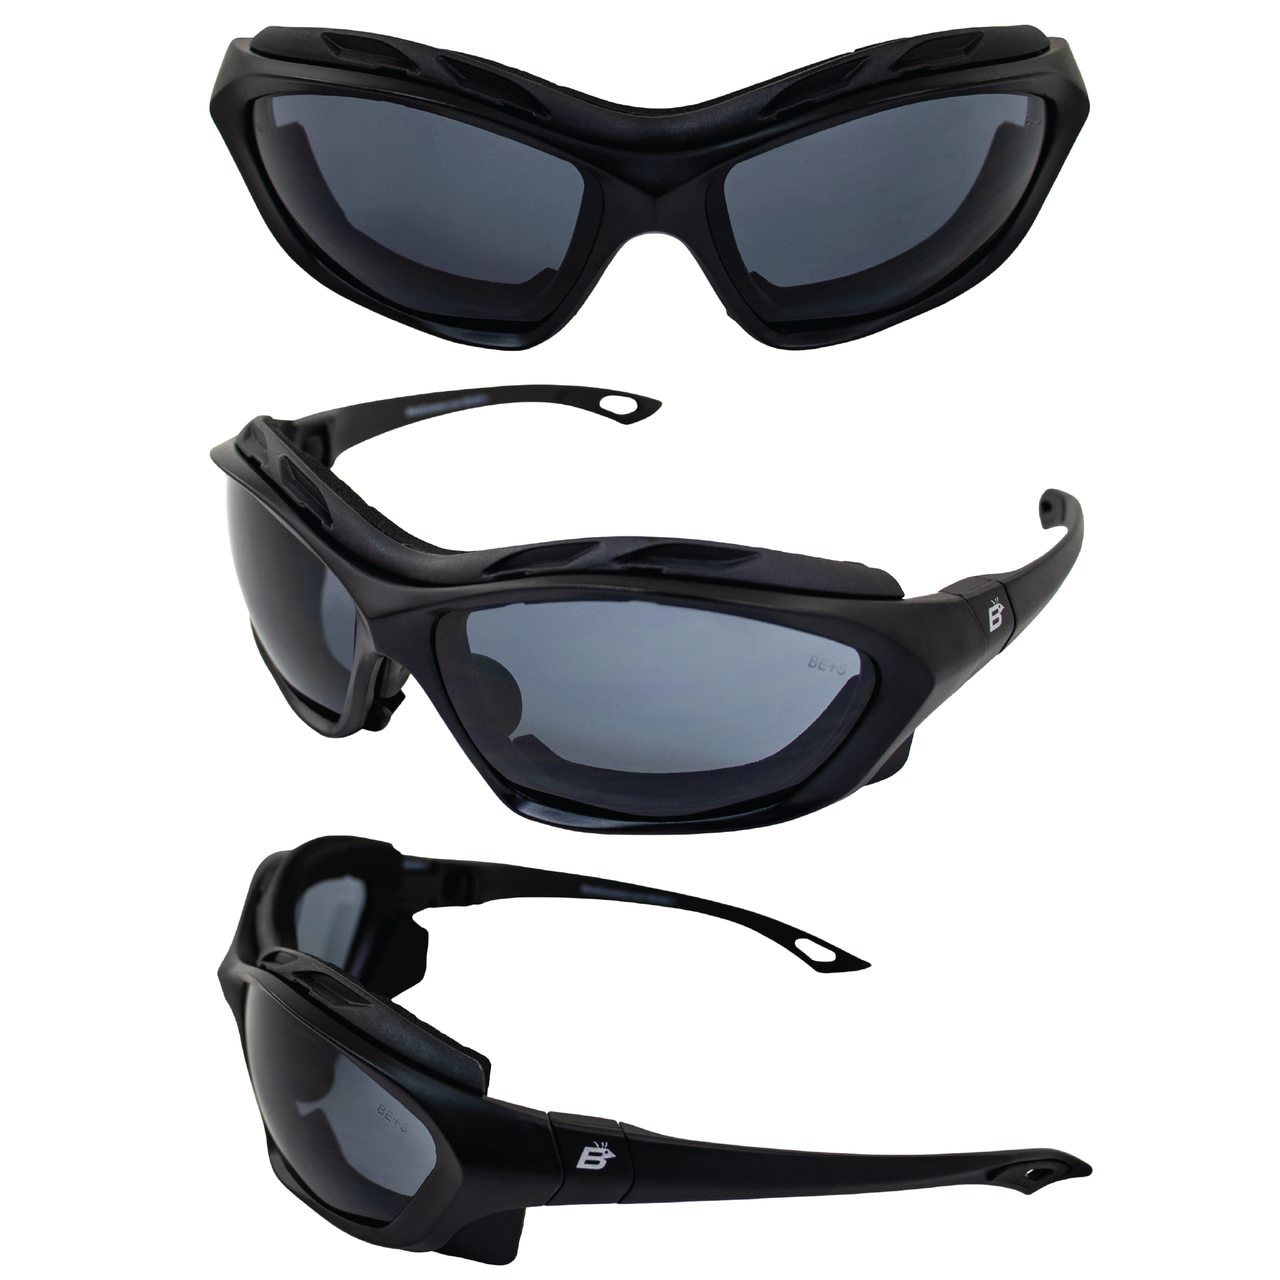 Canopy Sunglasses